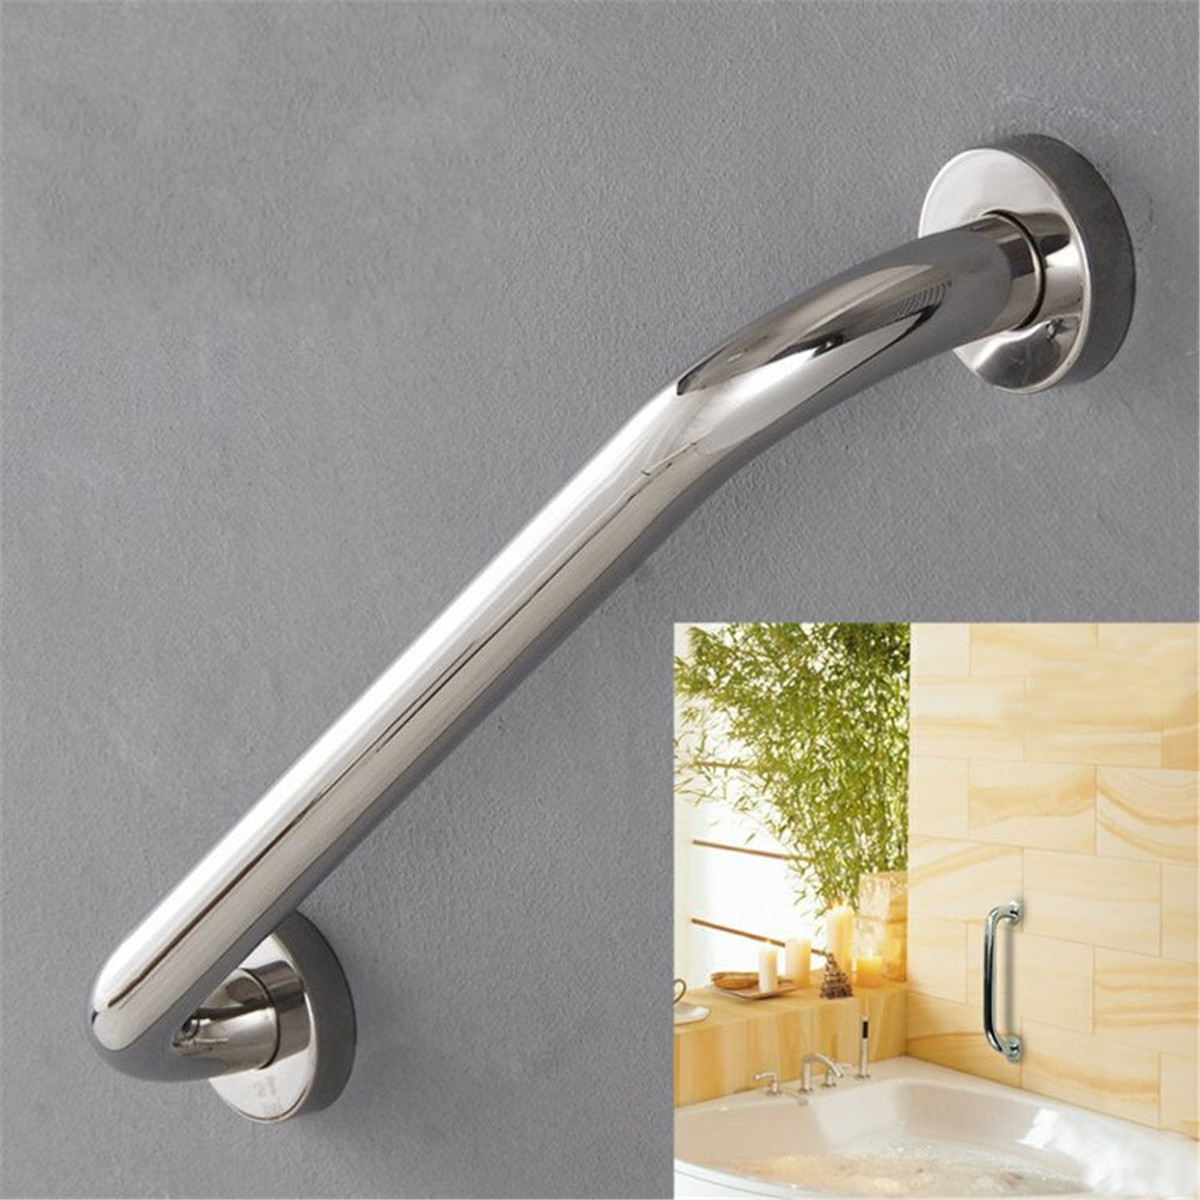 Stainless-Steel-Safety-Bath-Bathroom-Shower-Tub-Hand-Grips-Grab-Bar-Handle-25cm-1273274